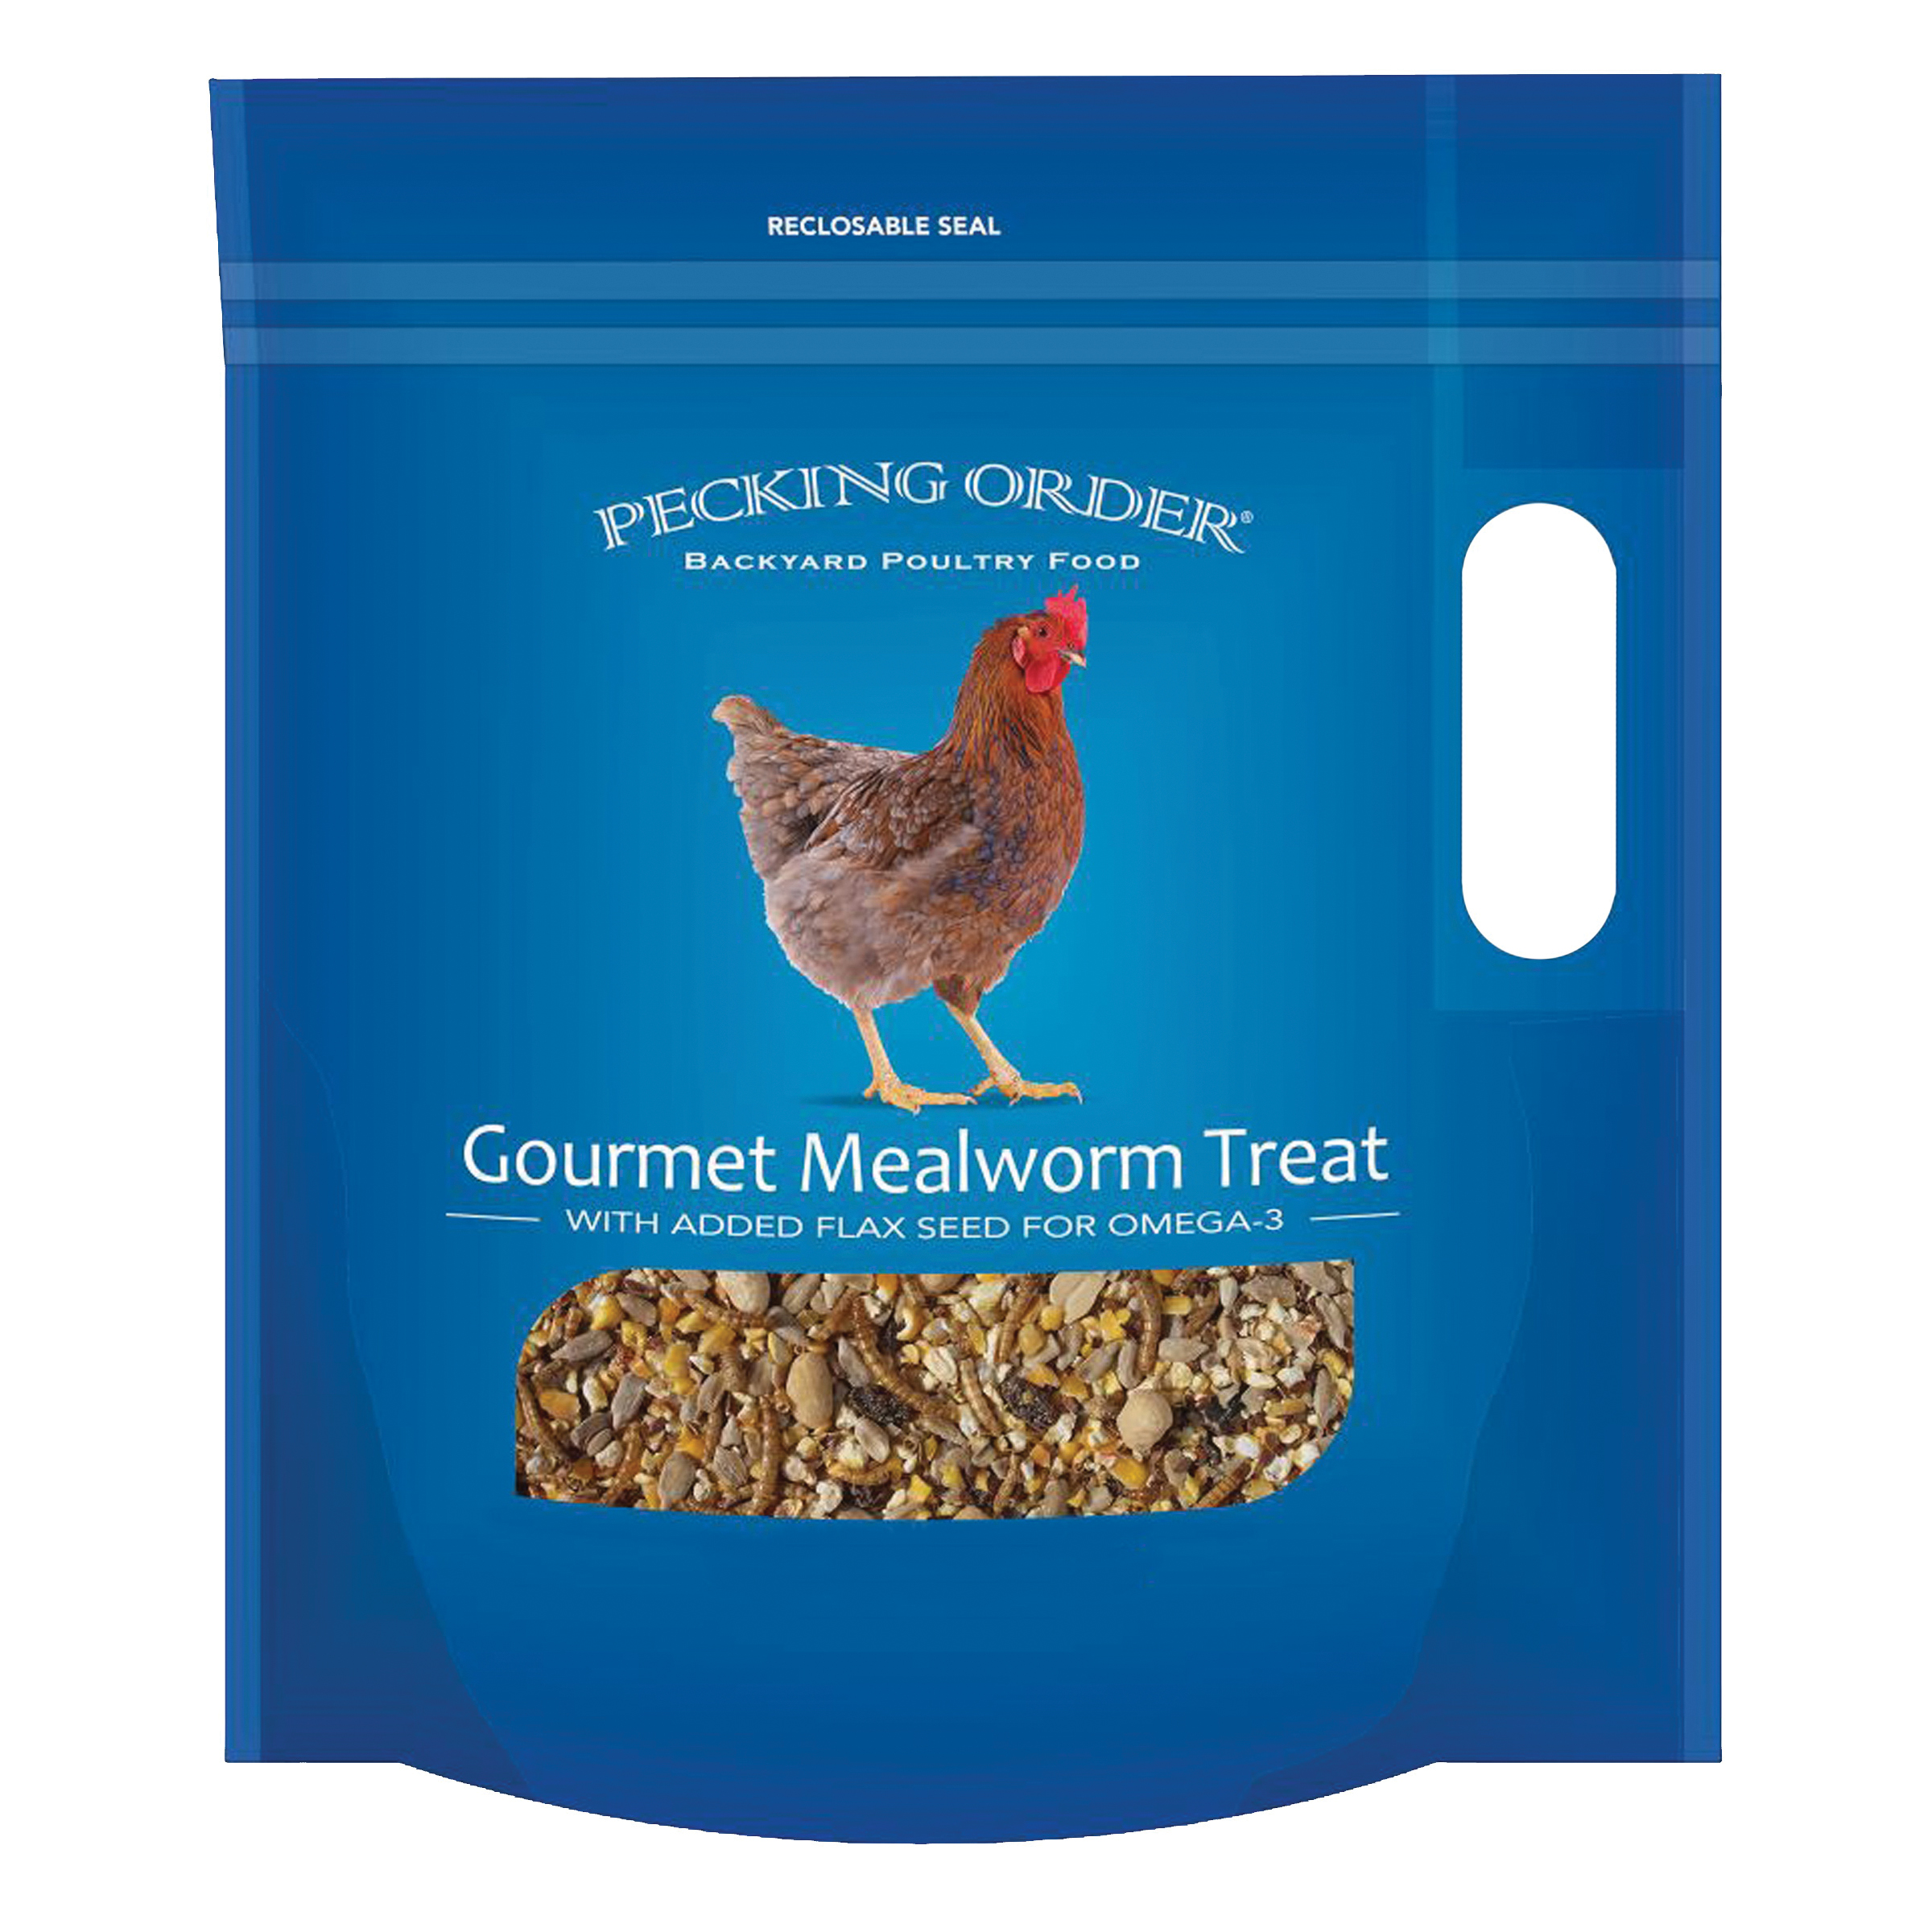 Pecking Order 009326 Chicken Mealworm Treat, 3 lb Bag - 1